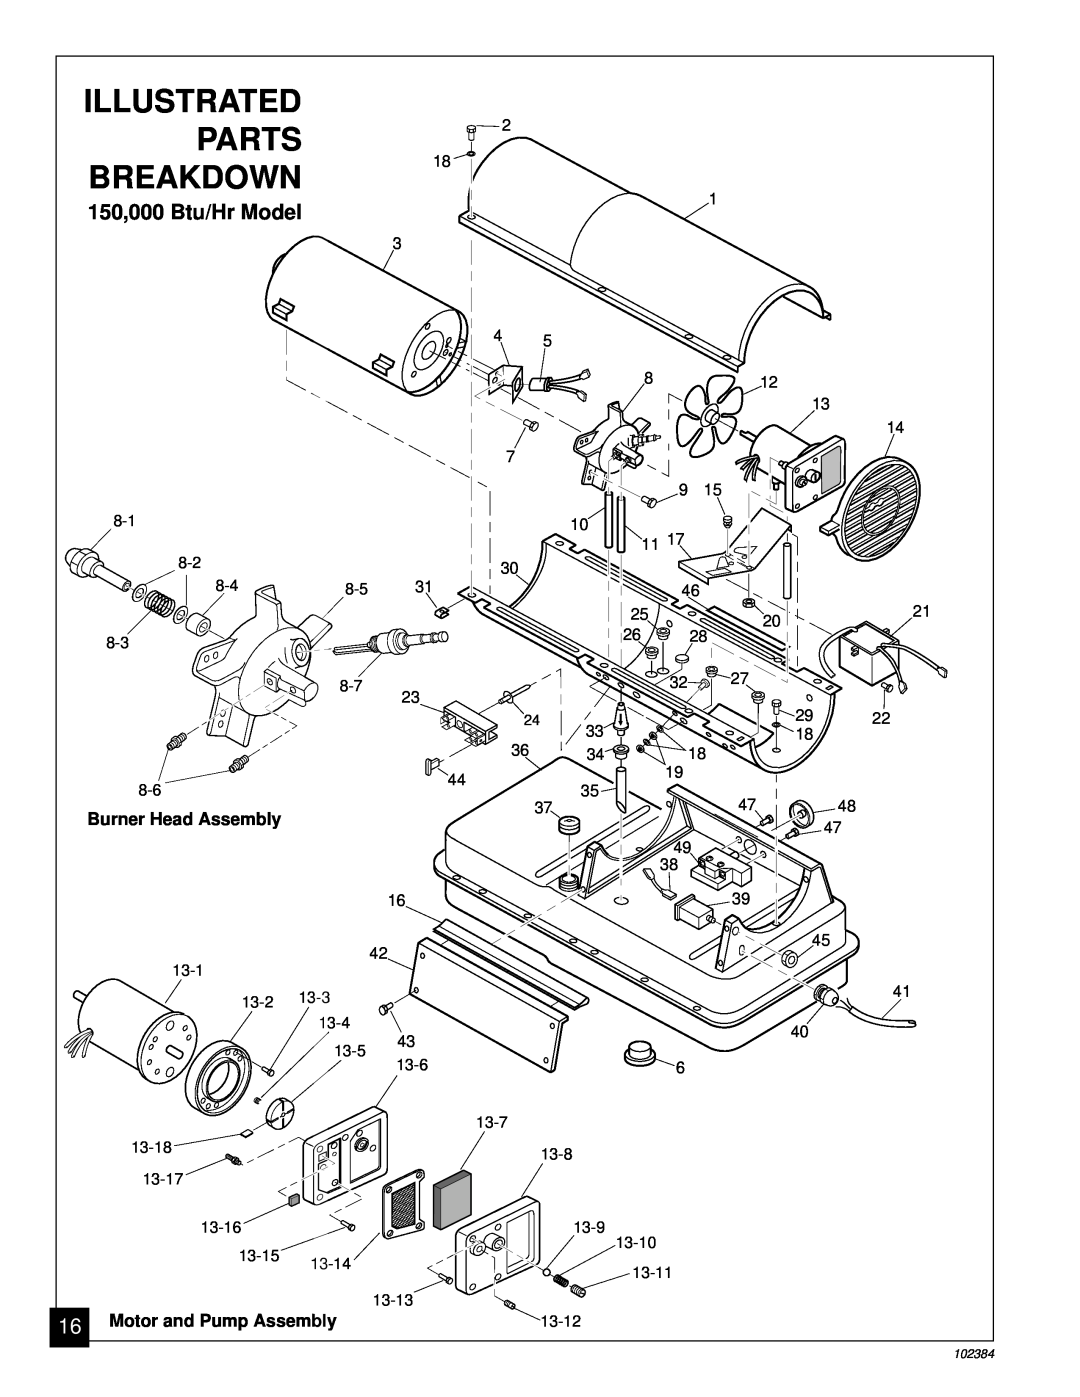 Master Lock BR150CE Parts, Breakdown, Illustrated, 150,000 Btu/Hr Model, Burner Head Assembly, Motor and Pump Assembly 